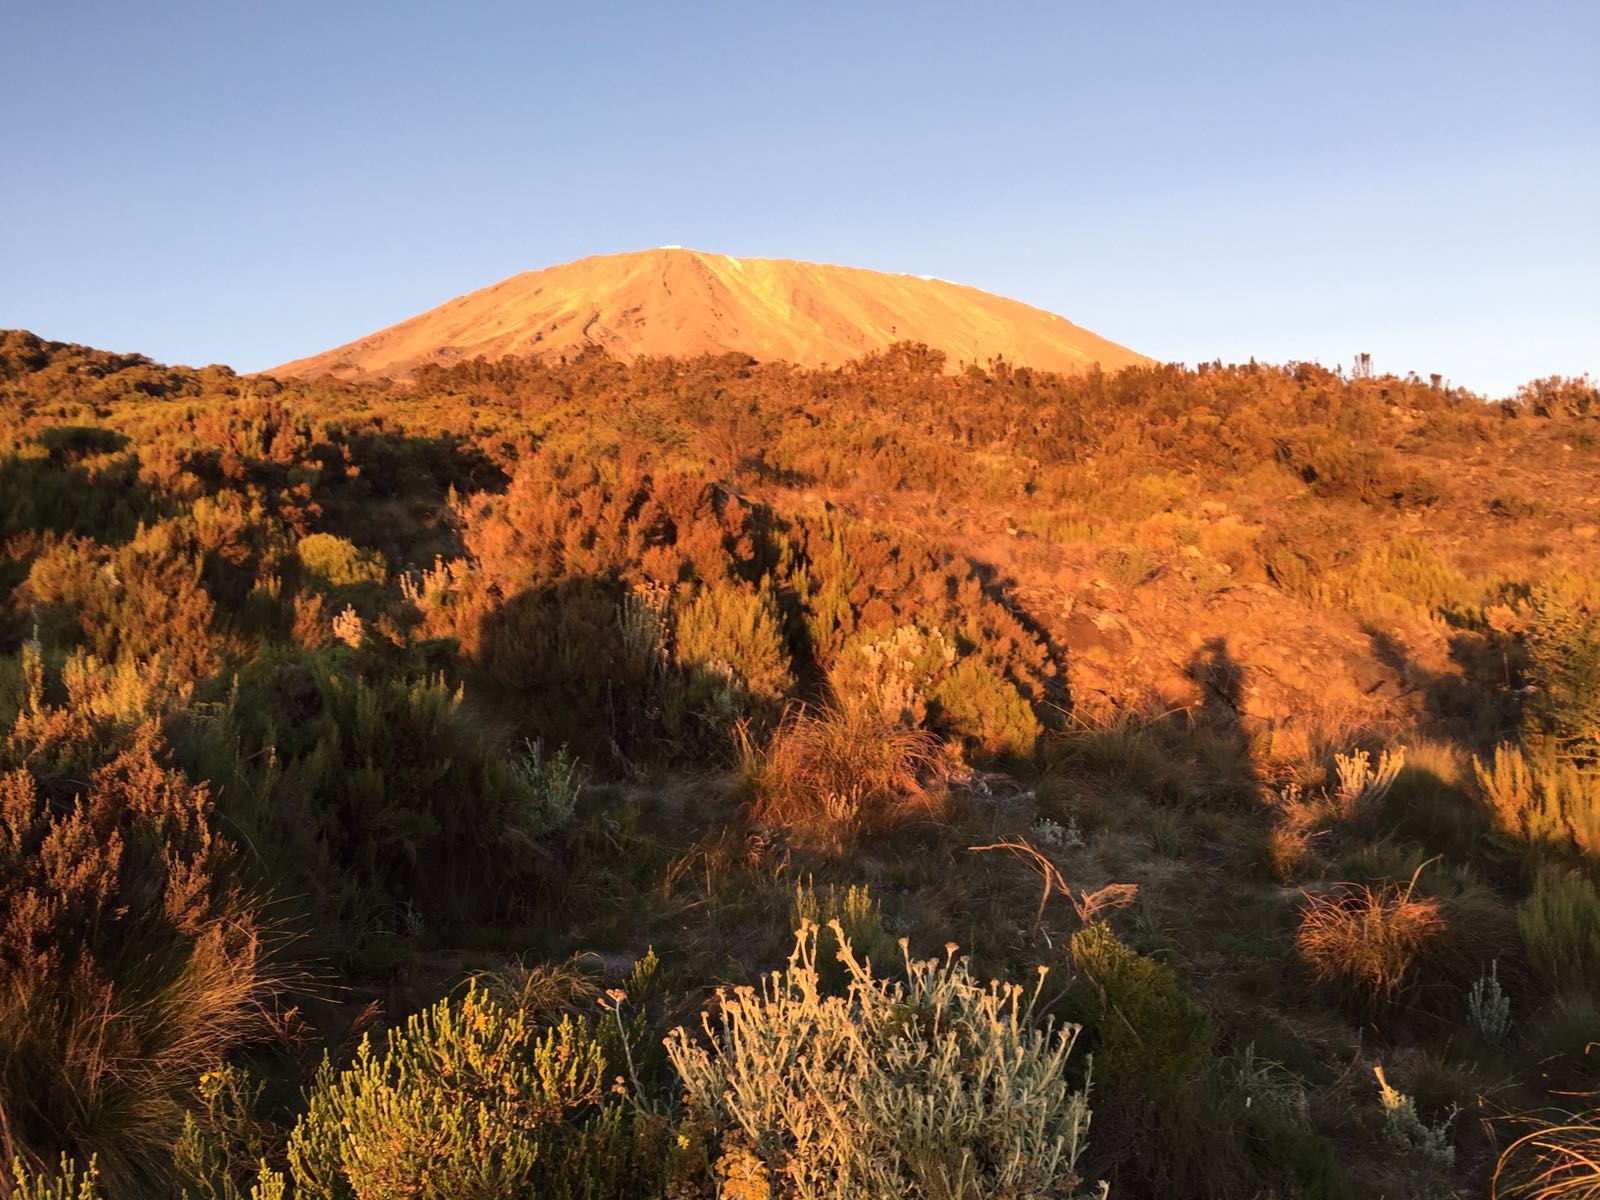 The beauty of Mt Kilimanjaro